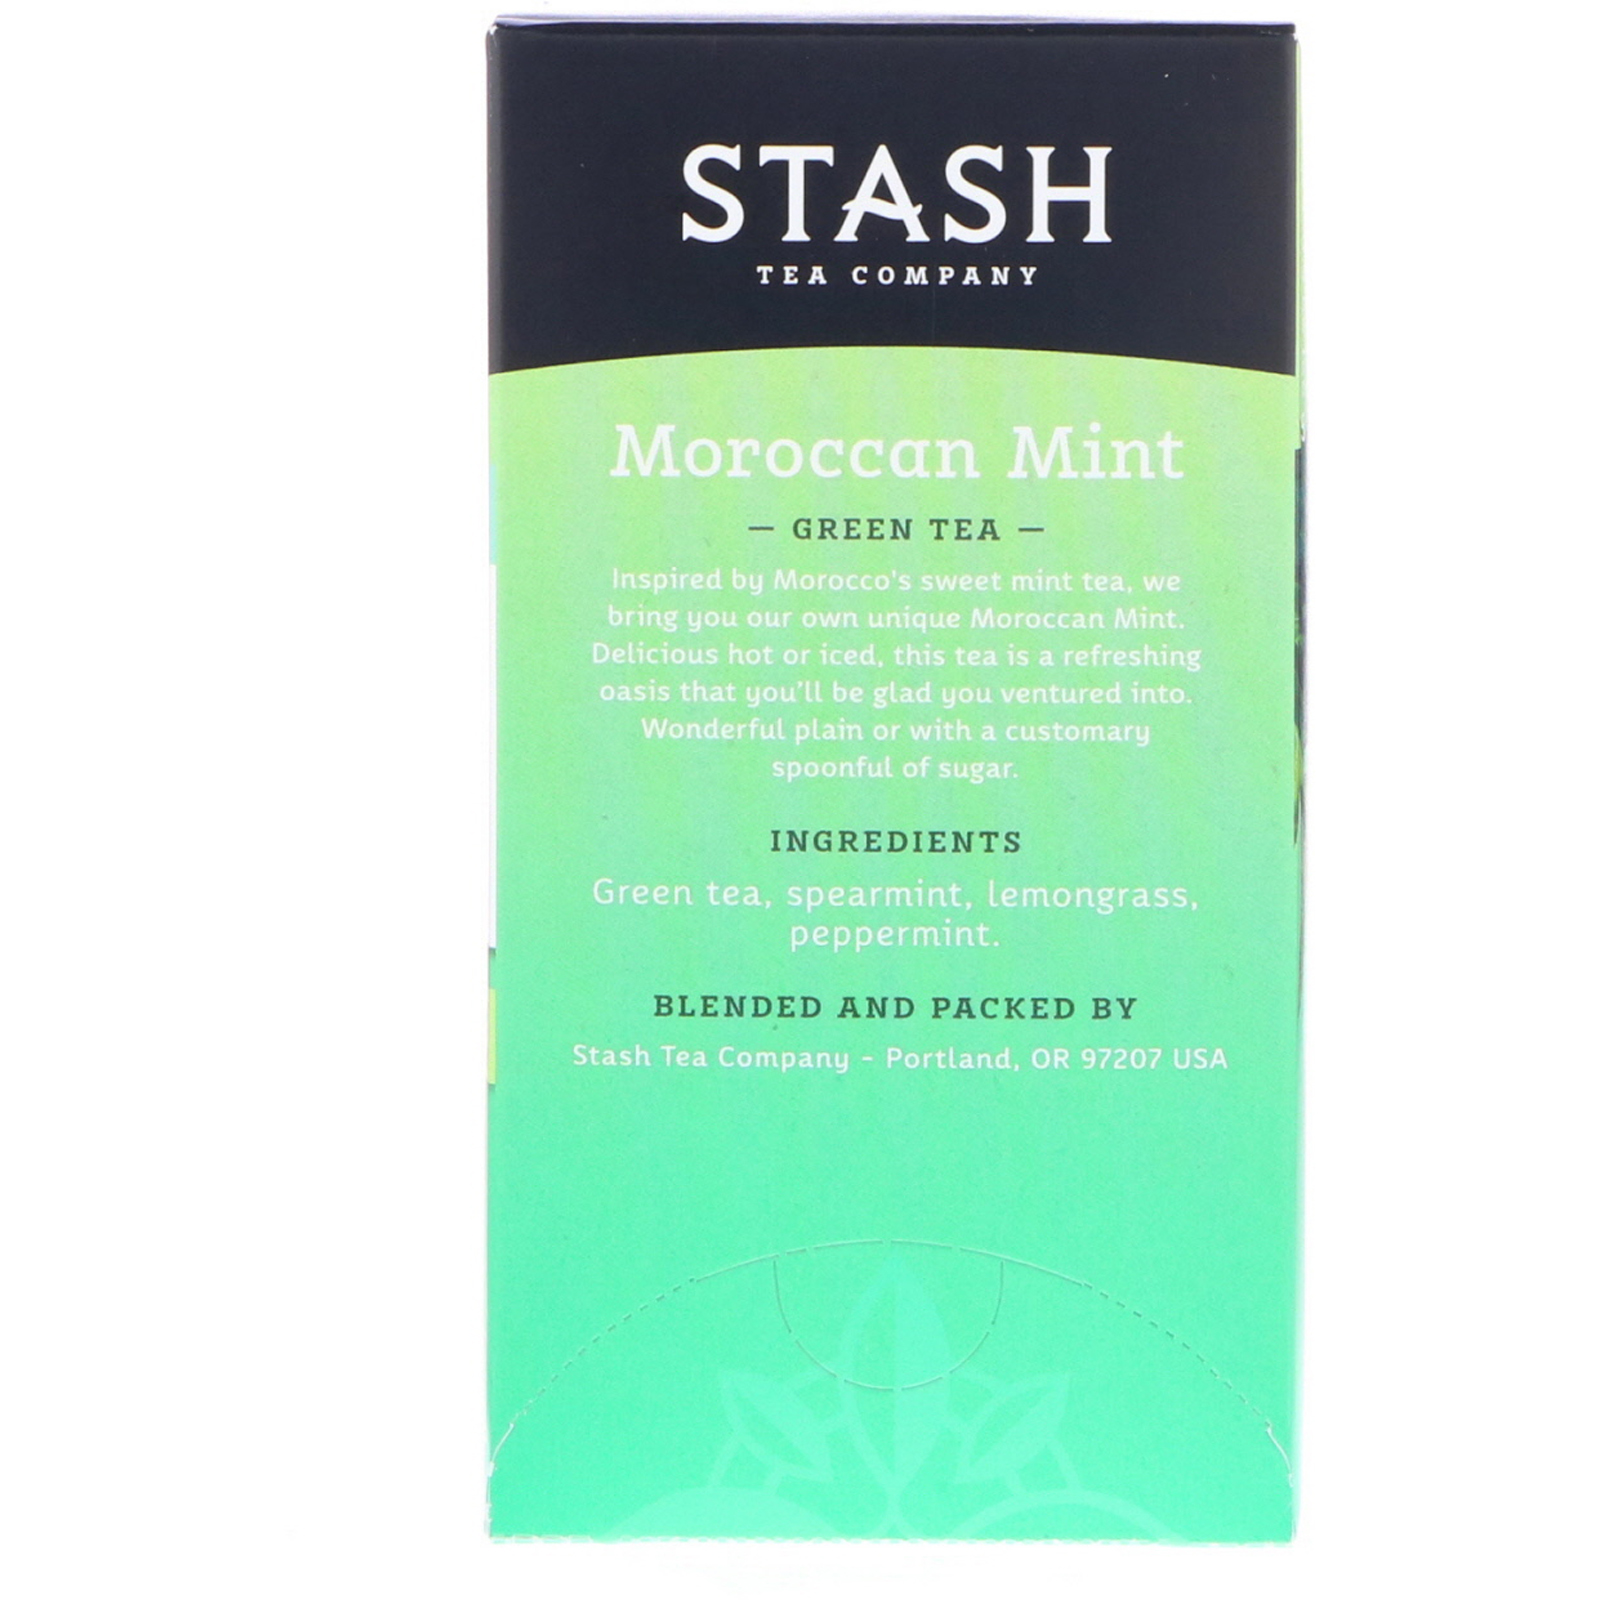 Stash Tea Green Tea Moroccan Mint 20 Tea Bags 0 9 Oz 26 G Iherb,Sealife Systems Wet Dry Filter